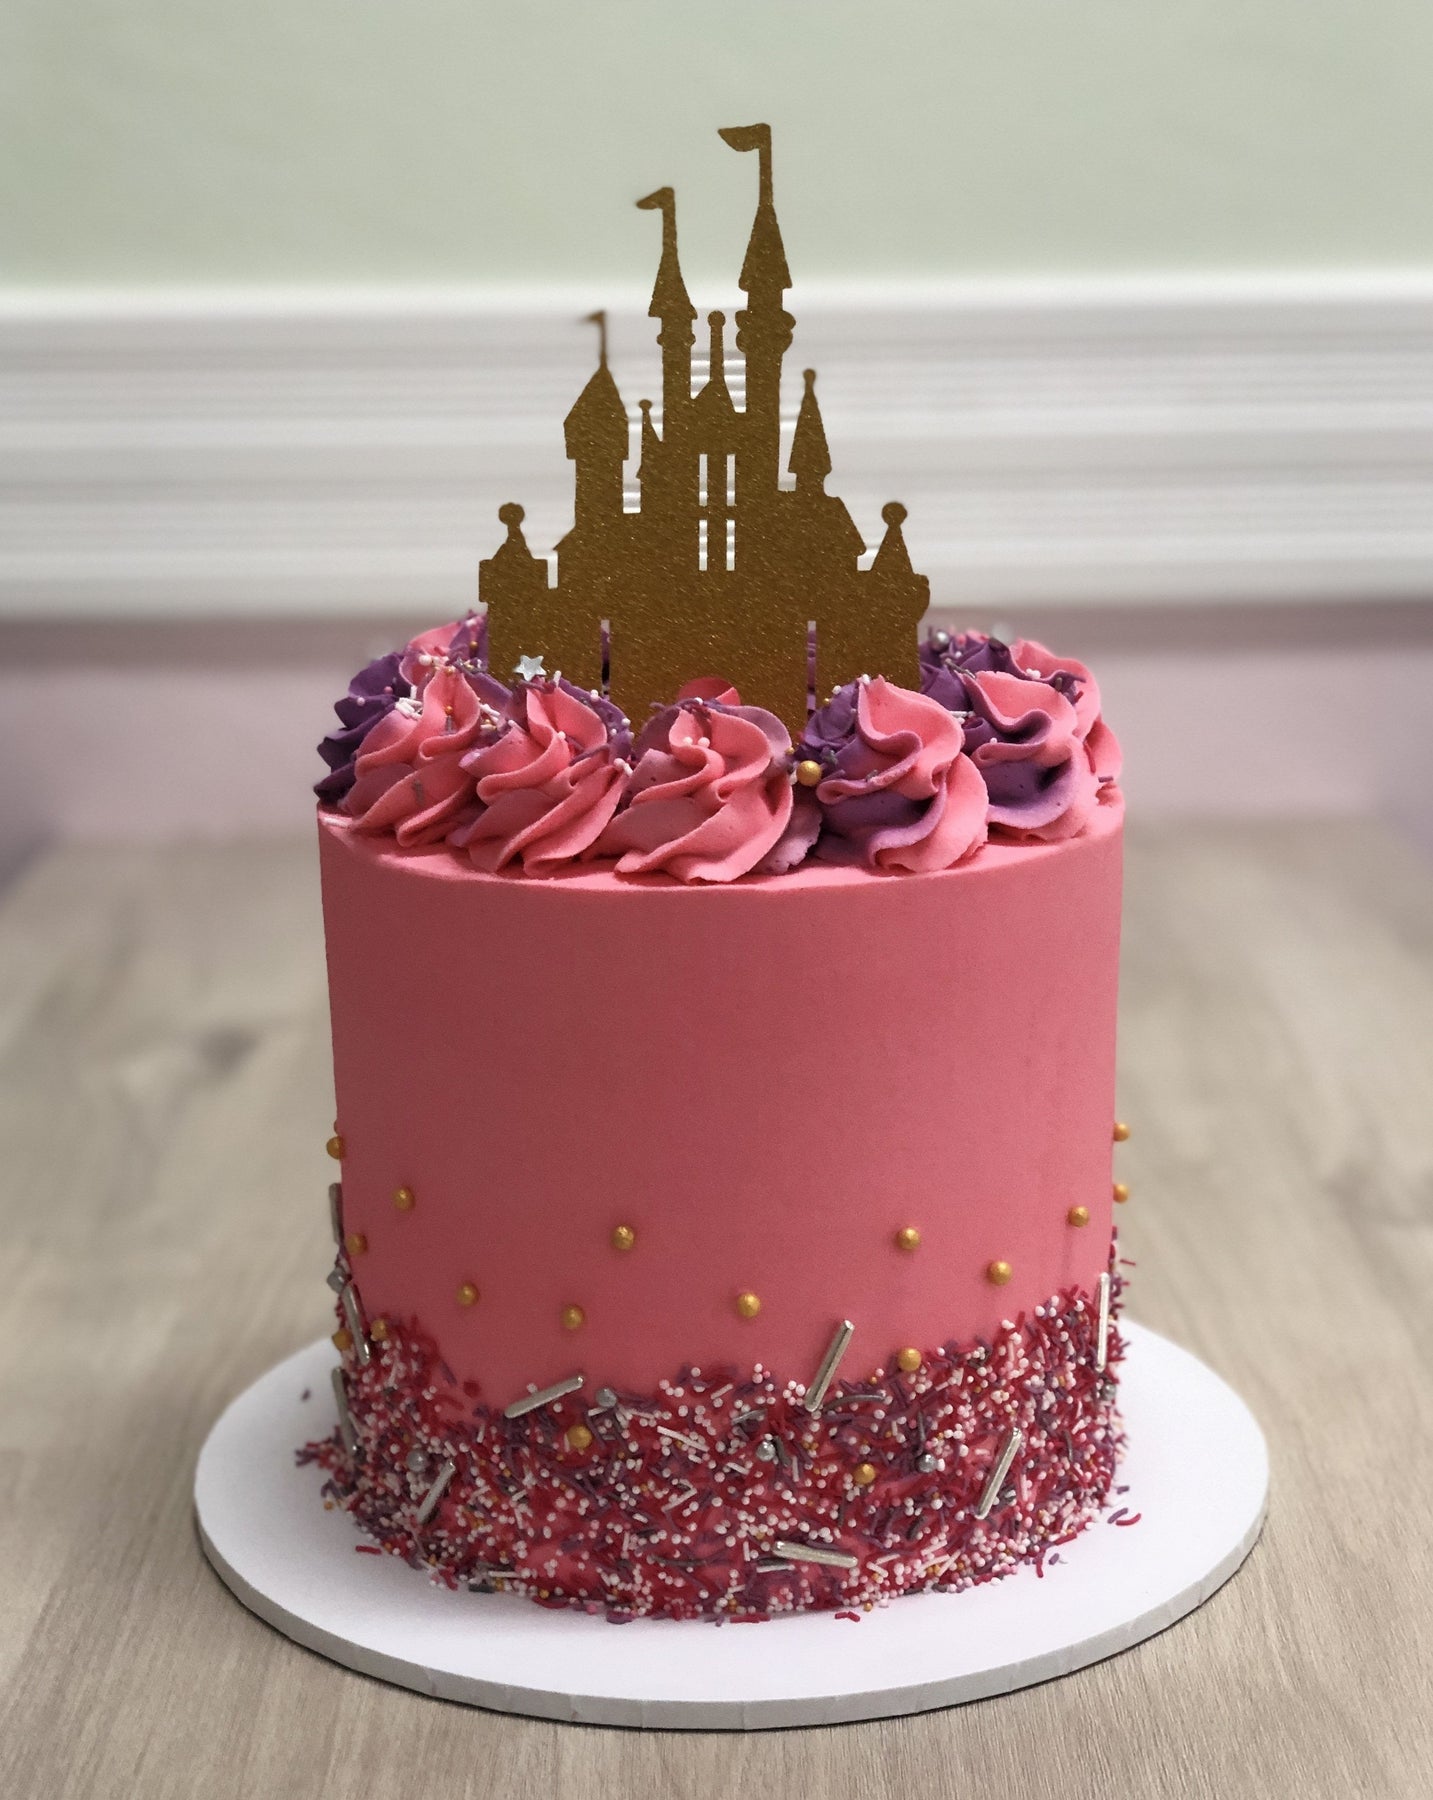 Princess Castle Cake tutorial : CakeBoss